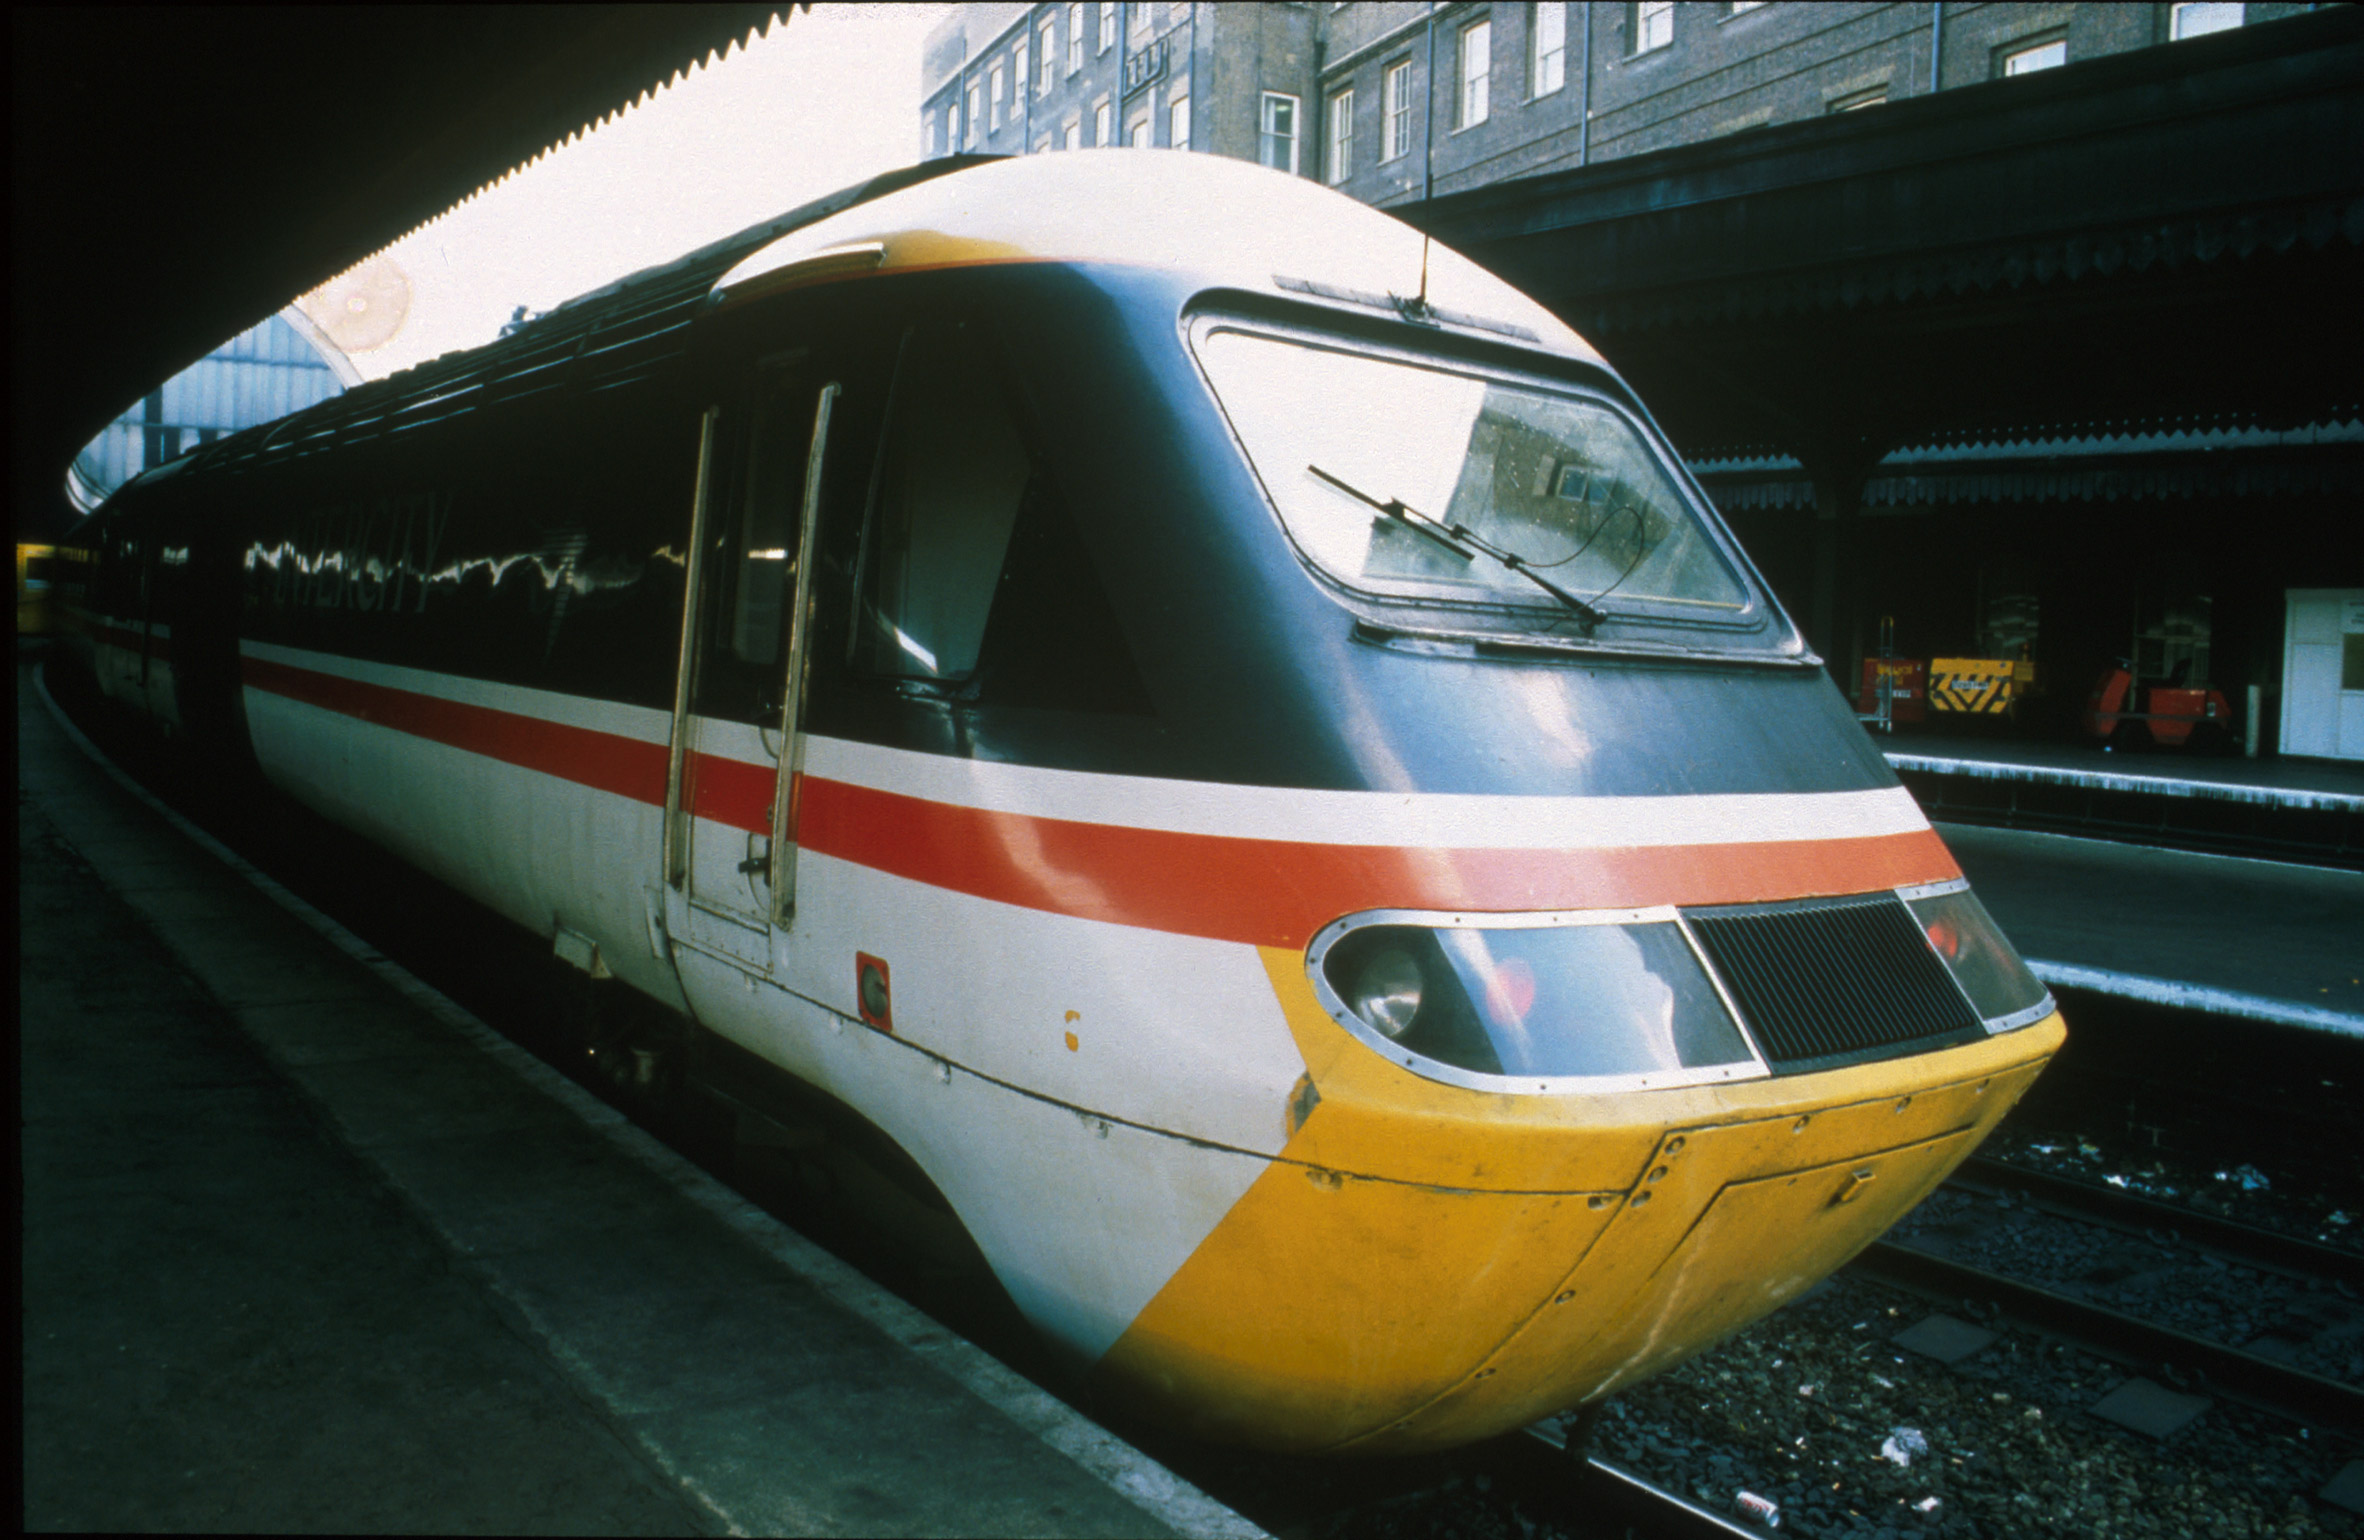 British Rail's Inter-City 125 High Speed train 